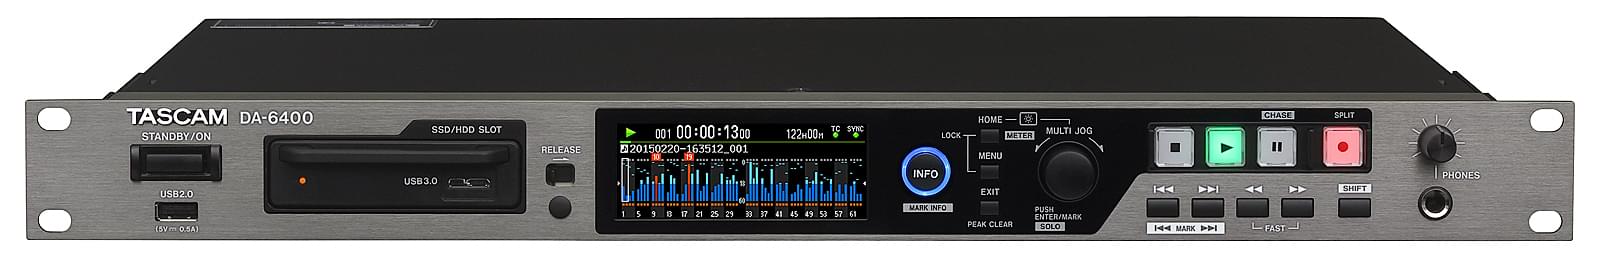 64-Spur-Audiorecorder | Tascam DA-6400